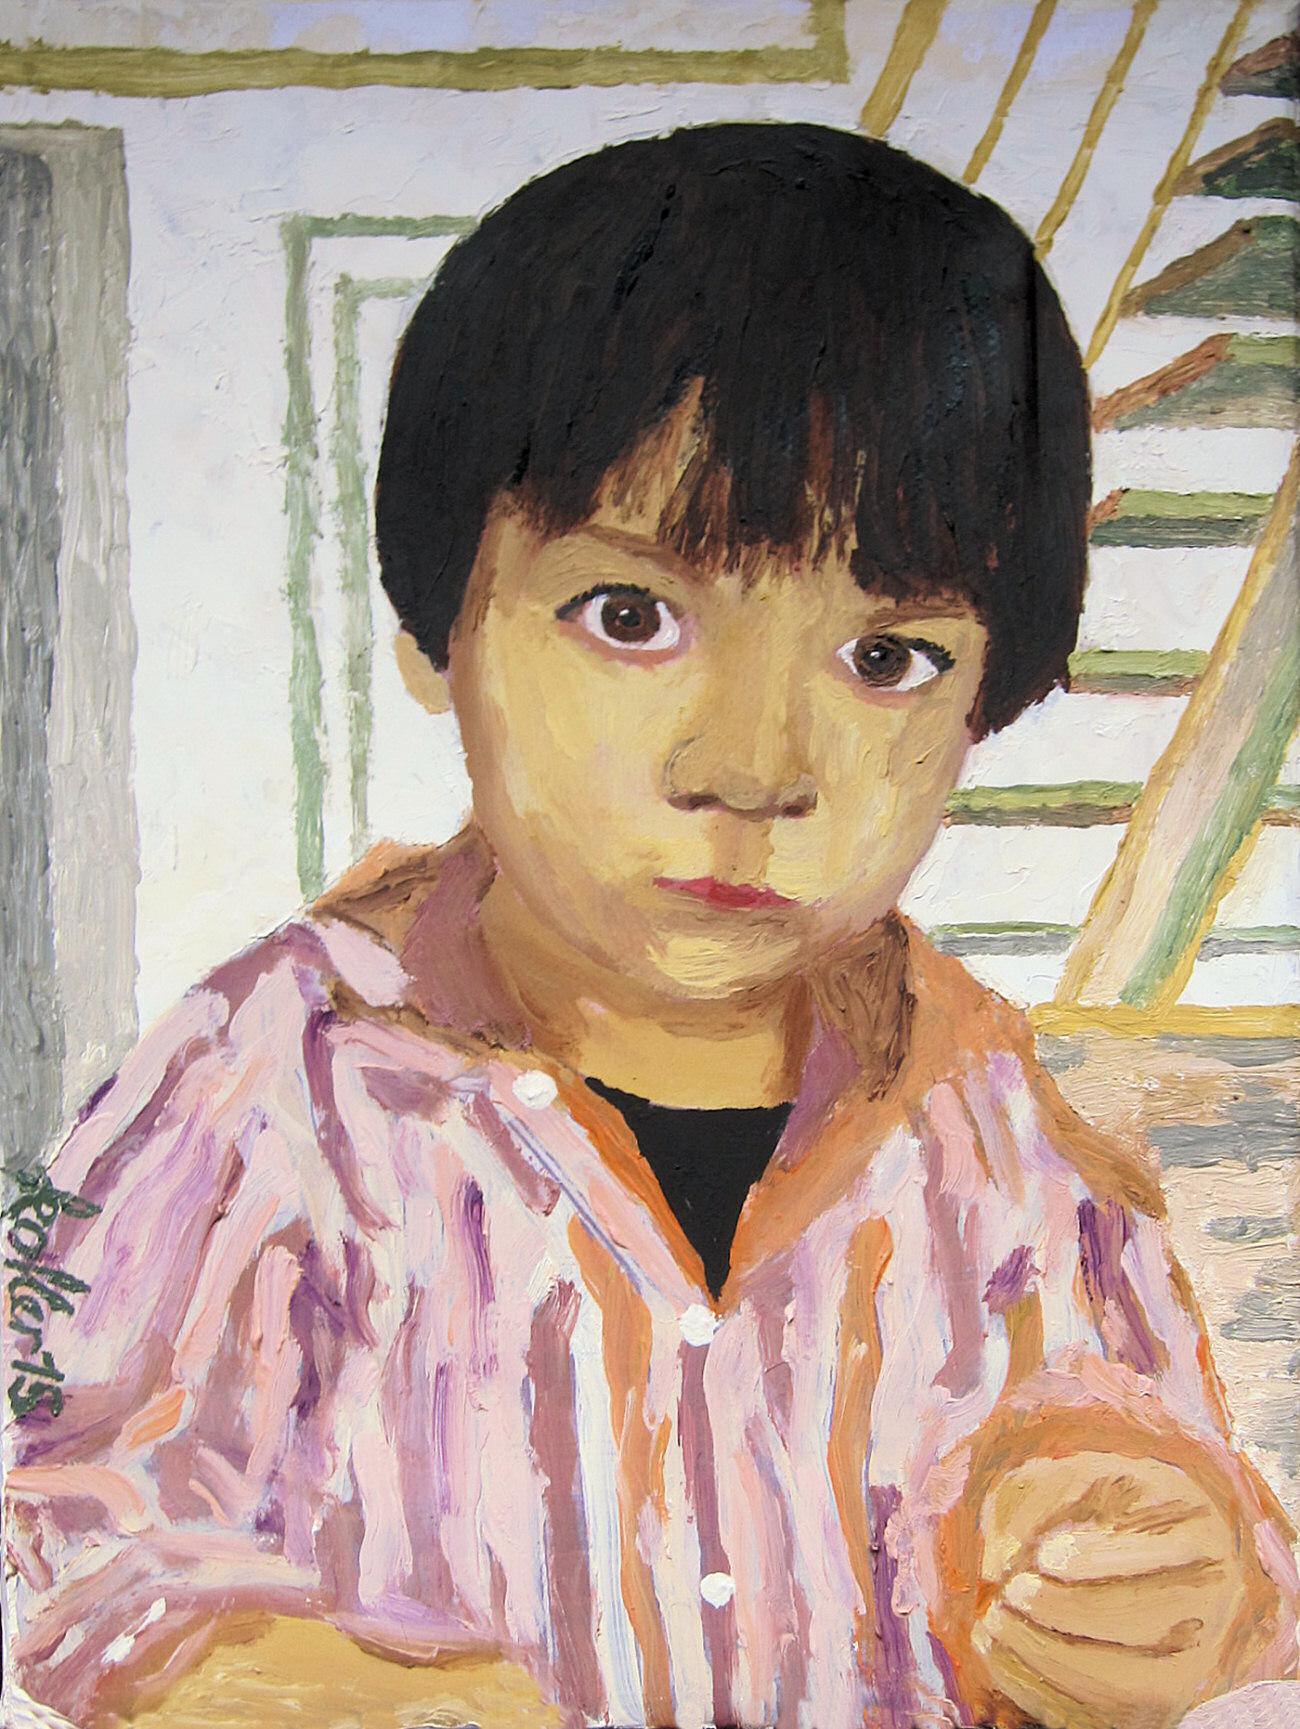 Painting: Vilbert portrait 2015